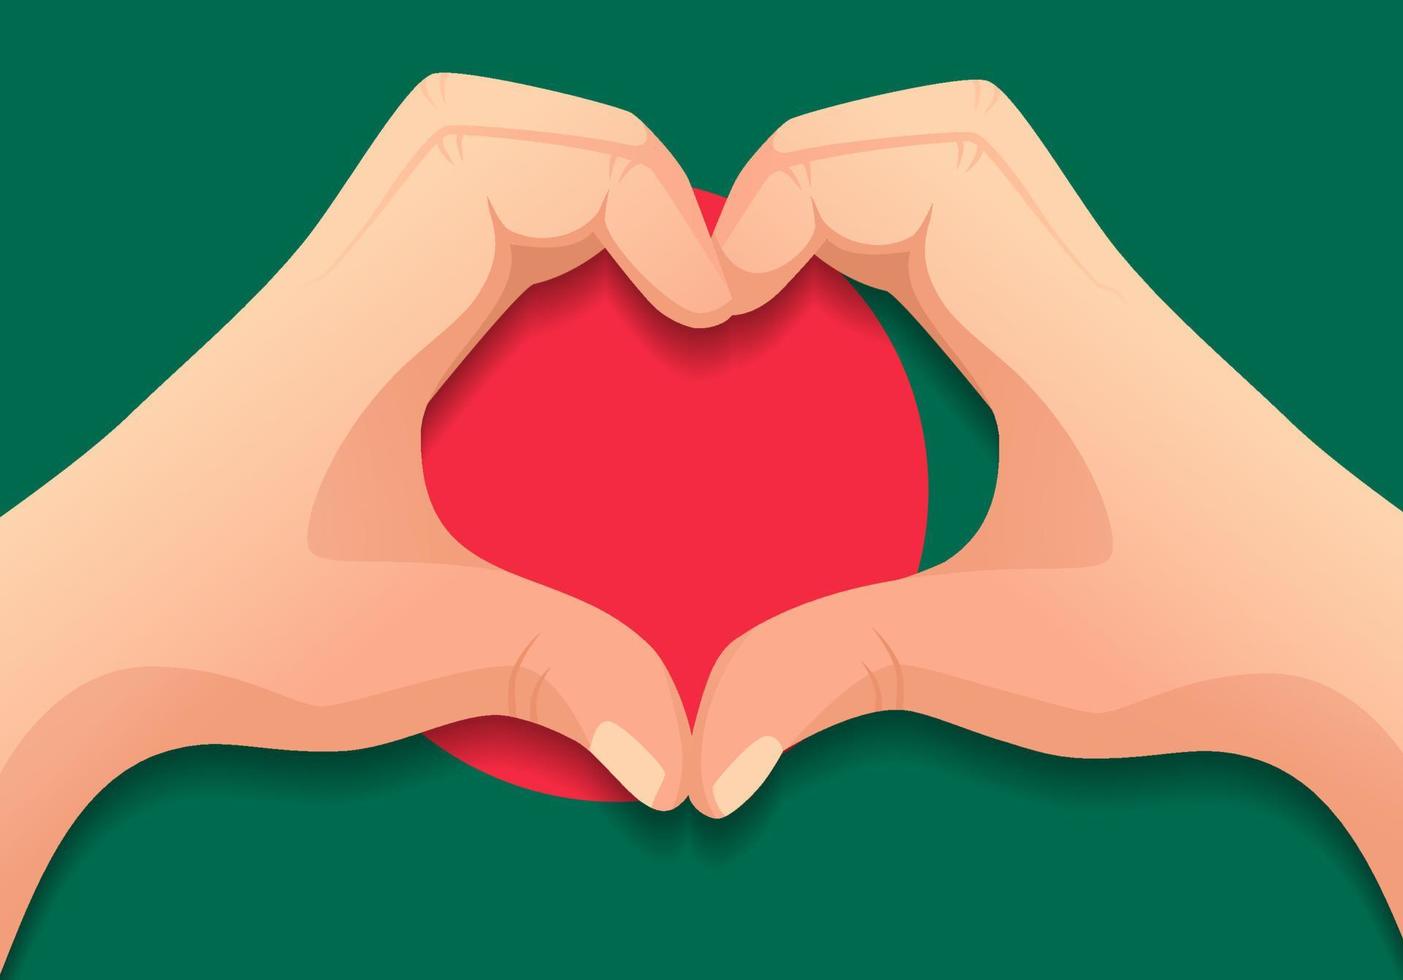 Bangladesh flag and hand heart shape vector